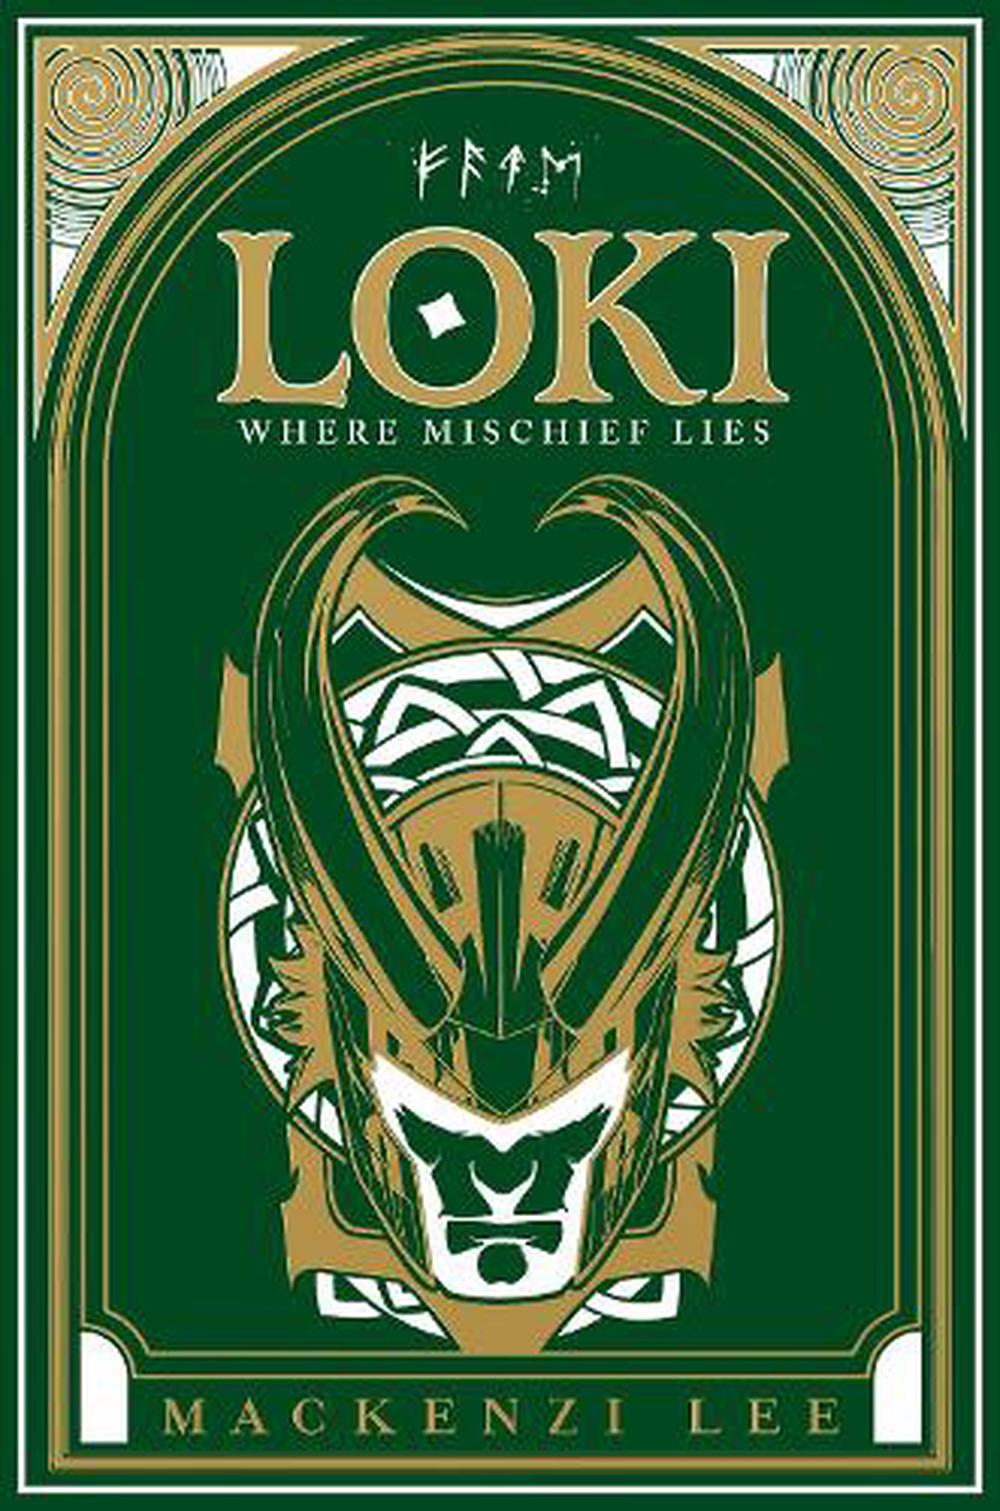 Loki: Where Mischief Lies (Marvel) by Mackenzi Lee, Hardcover,  9781761125324 | Buy online at The Nile